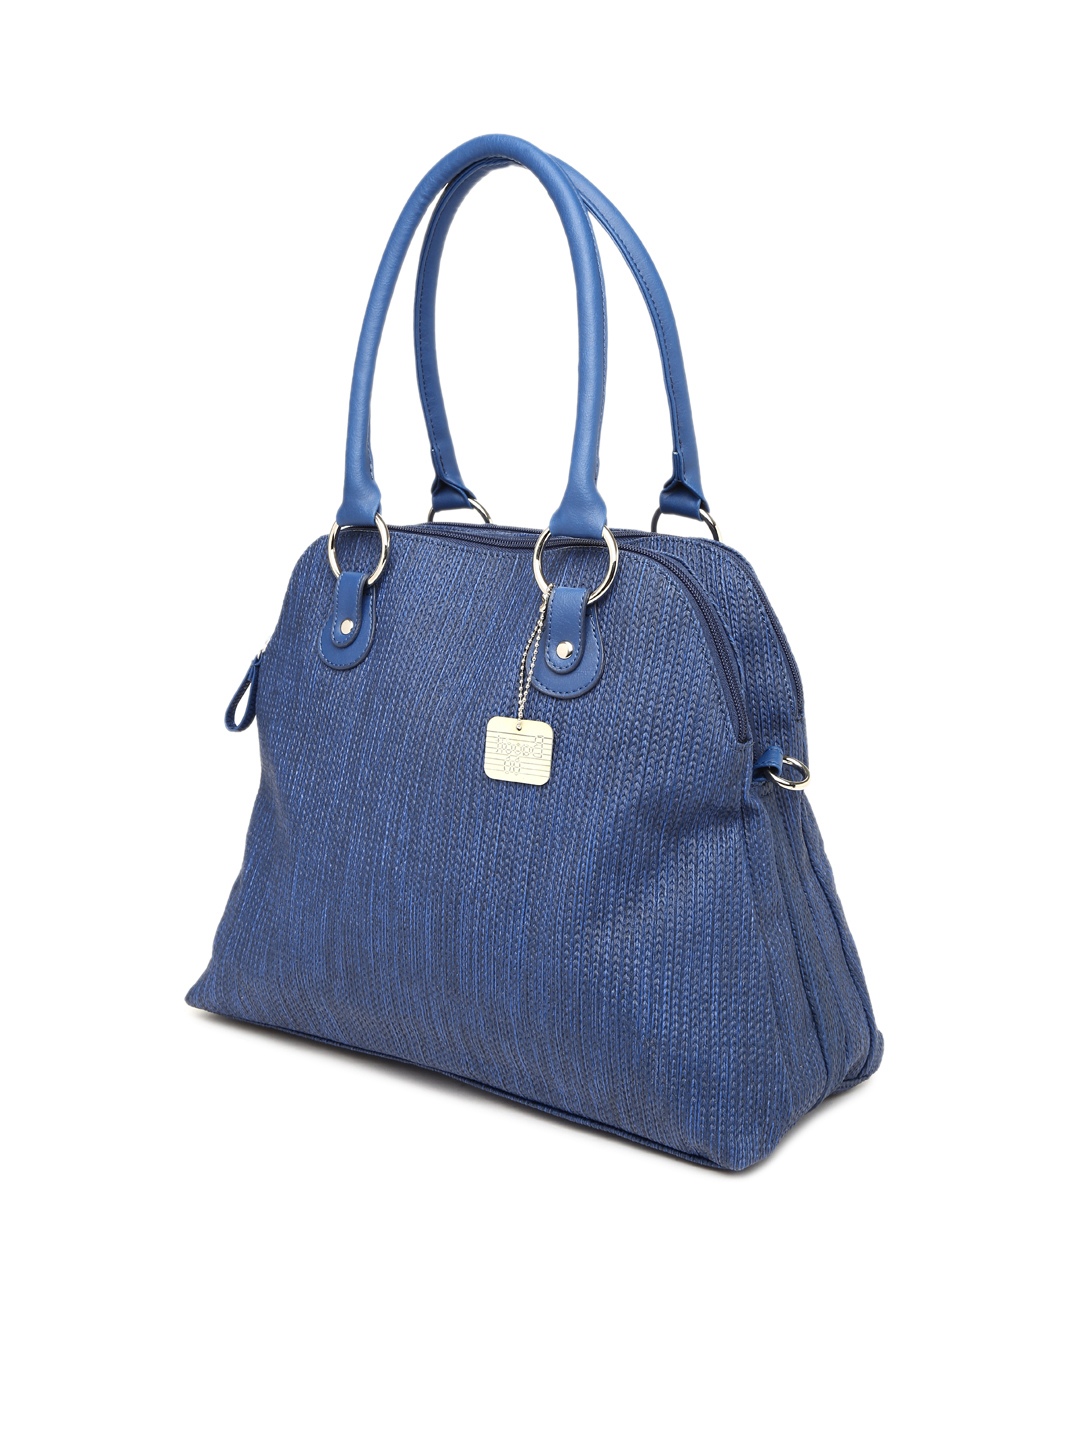 Myntra Baggit Blue Handbag 700252 | Buy Myntra Baggit Handbags at best price online. All myntra ...